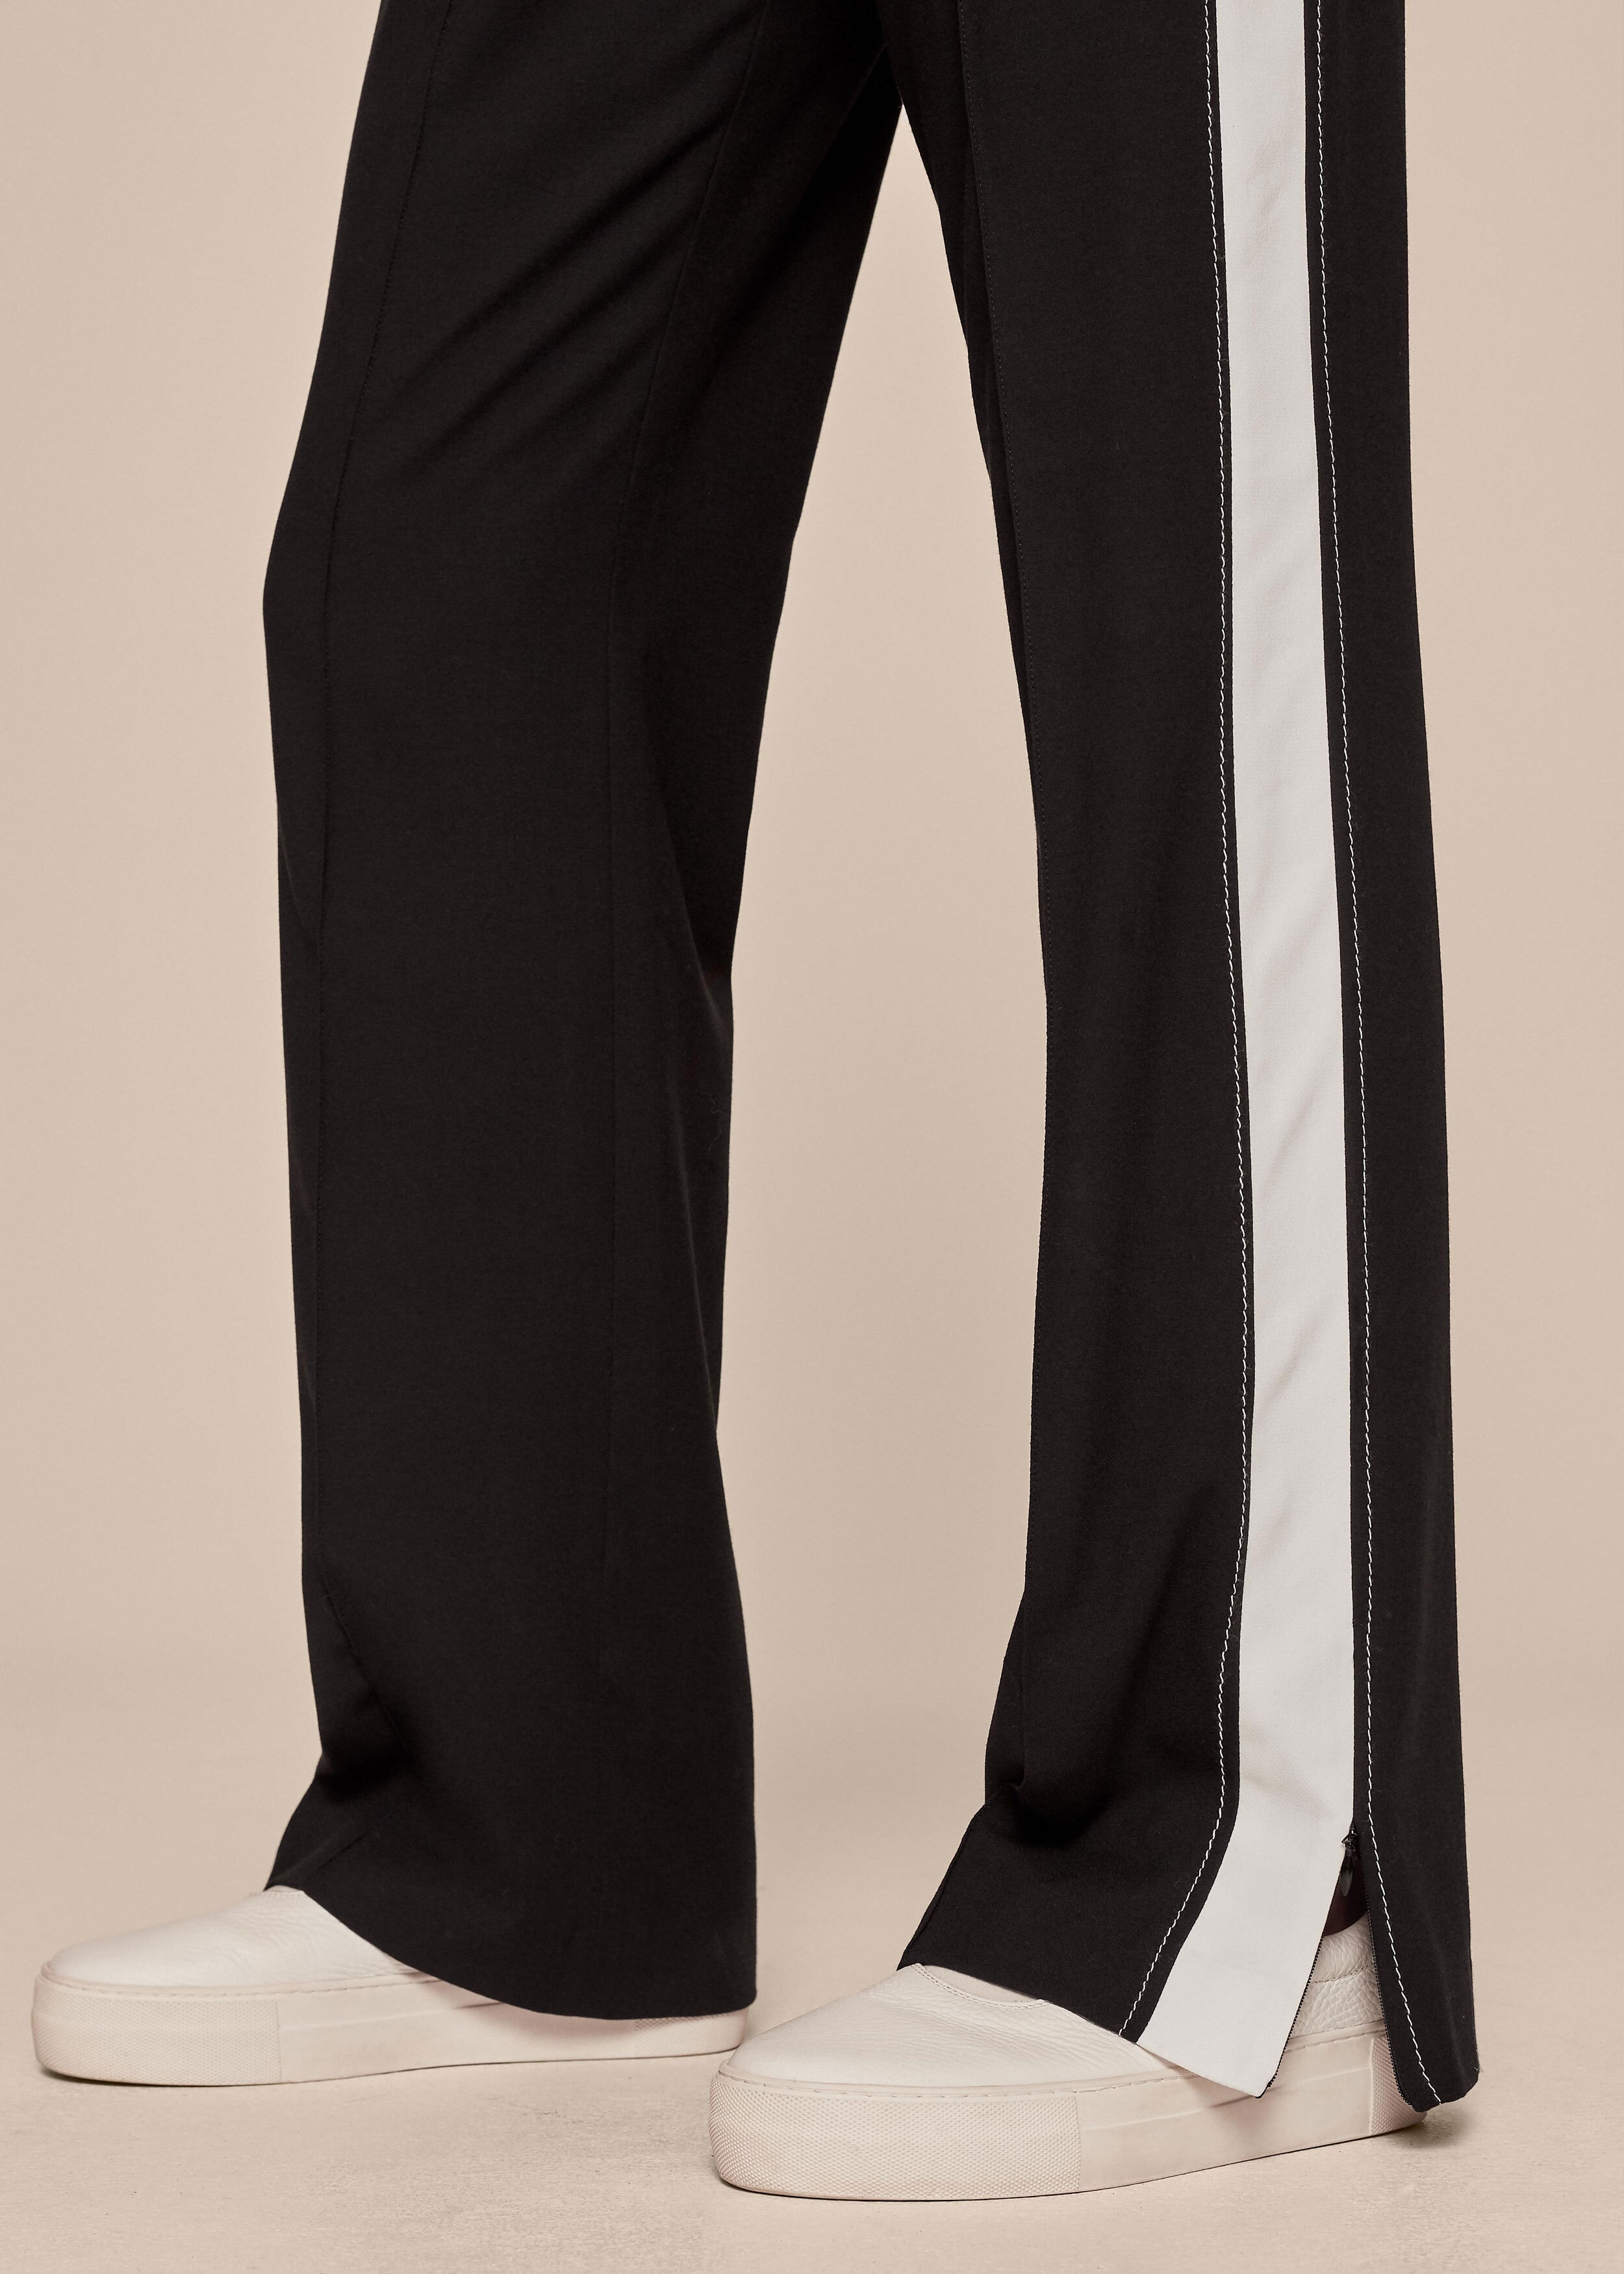 Tailored Crepe Track Pant Black/White